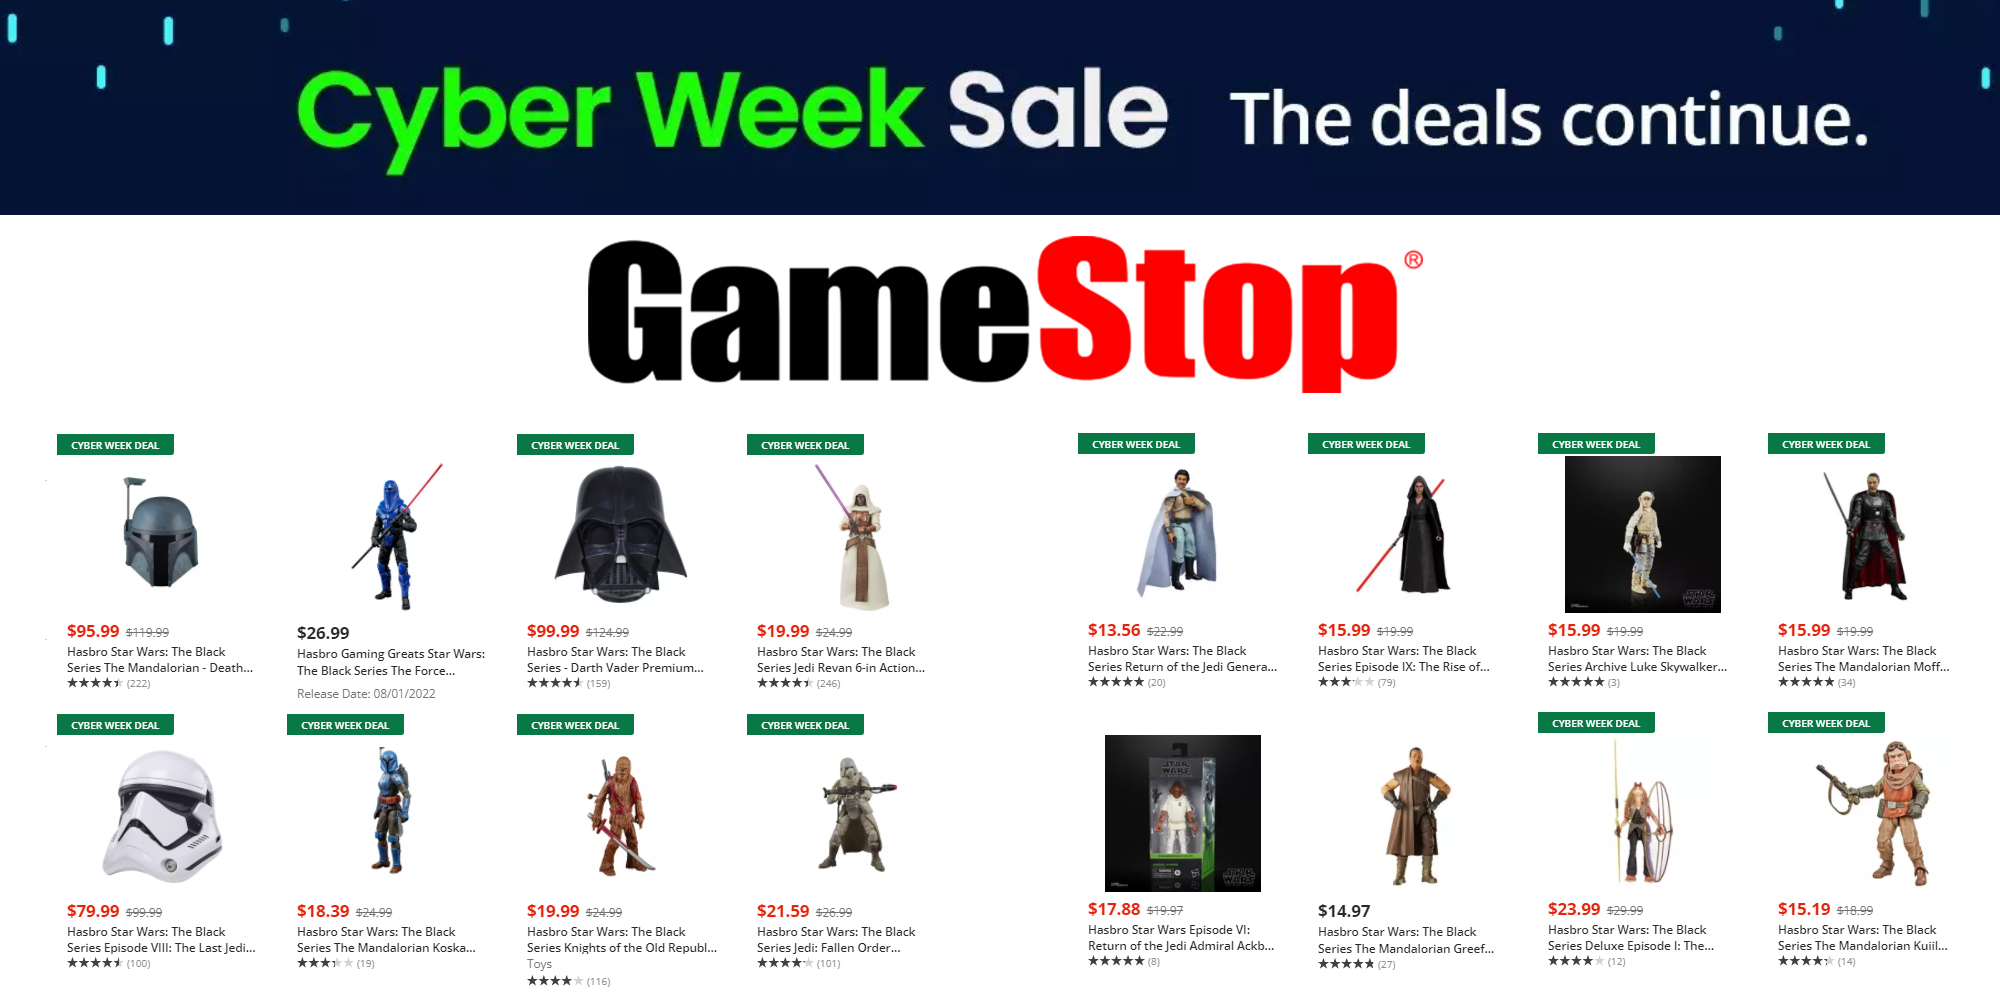 Star Wars Action Figures On Sale At Gamestop!